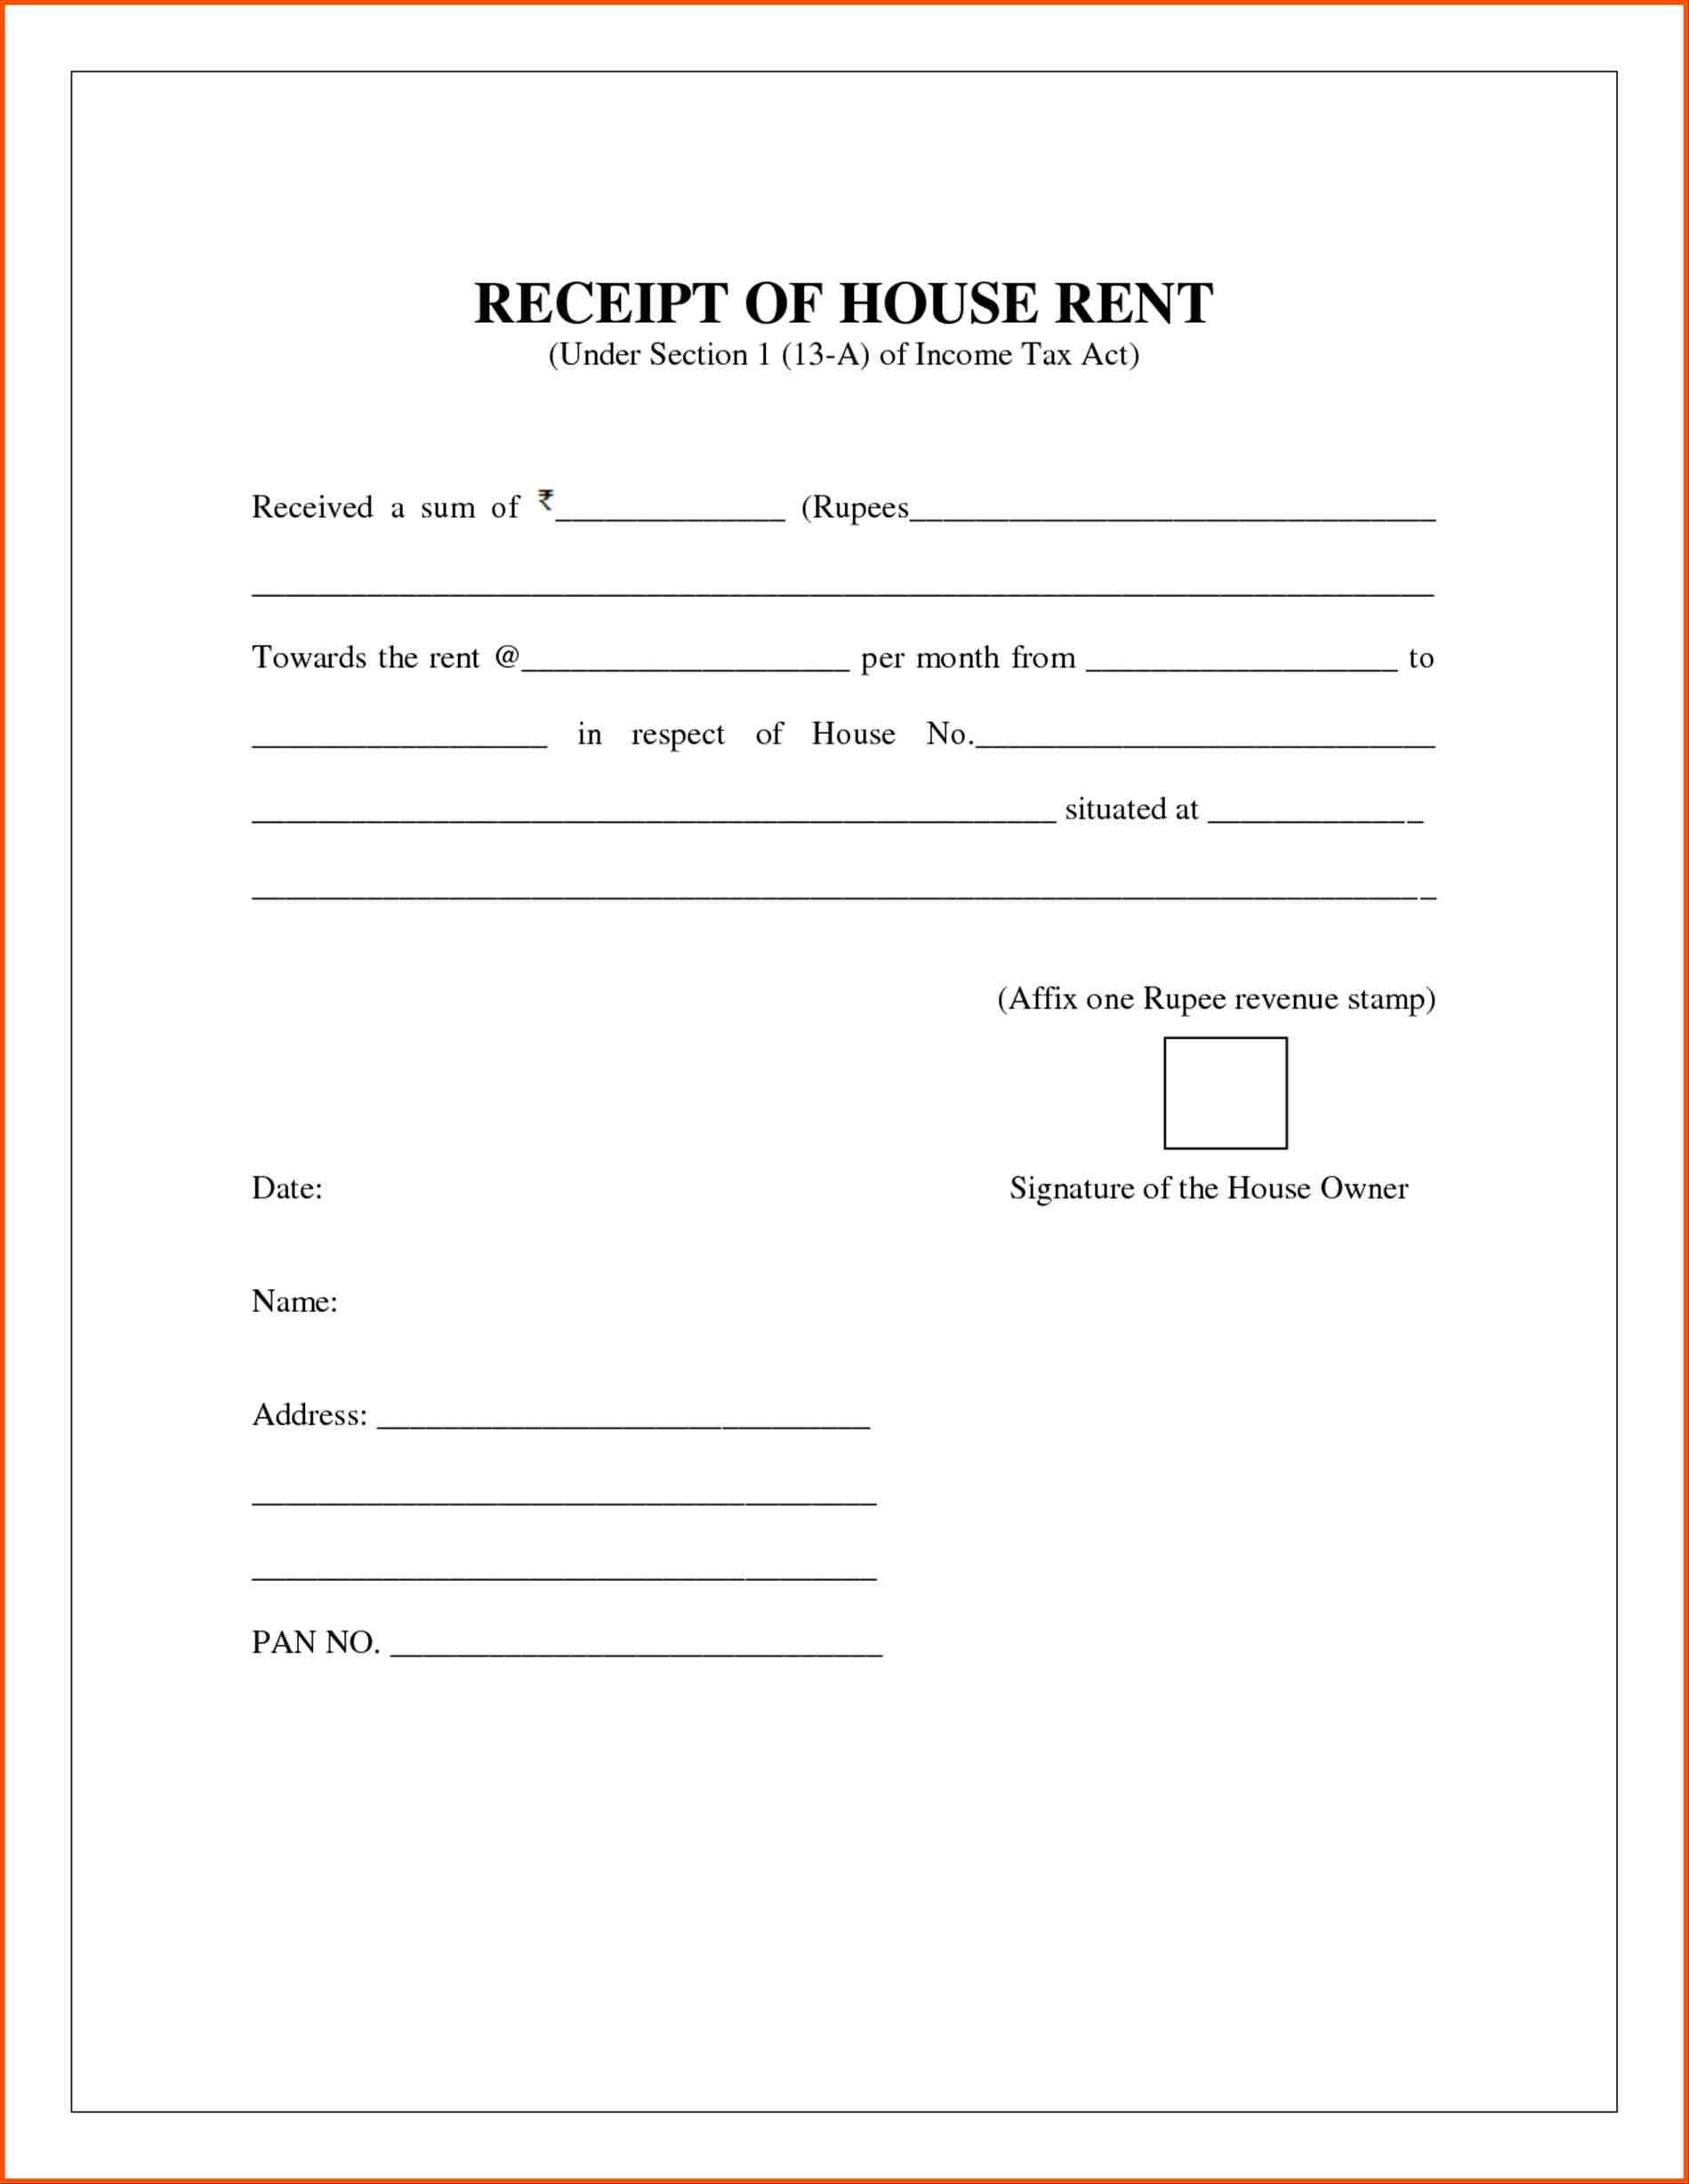 rent-receipts-flyapo